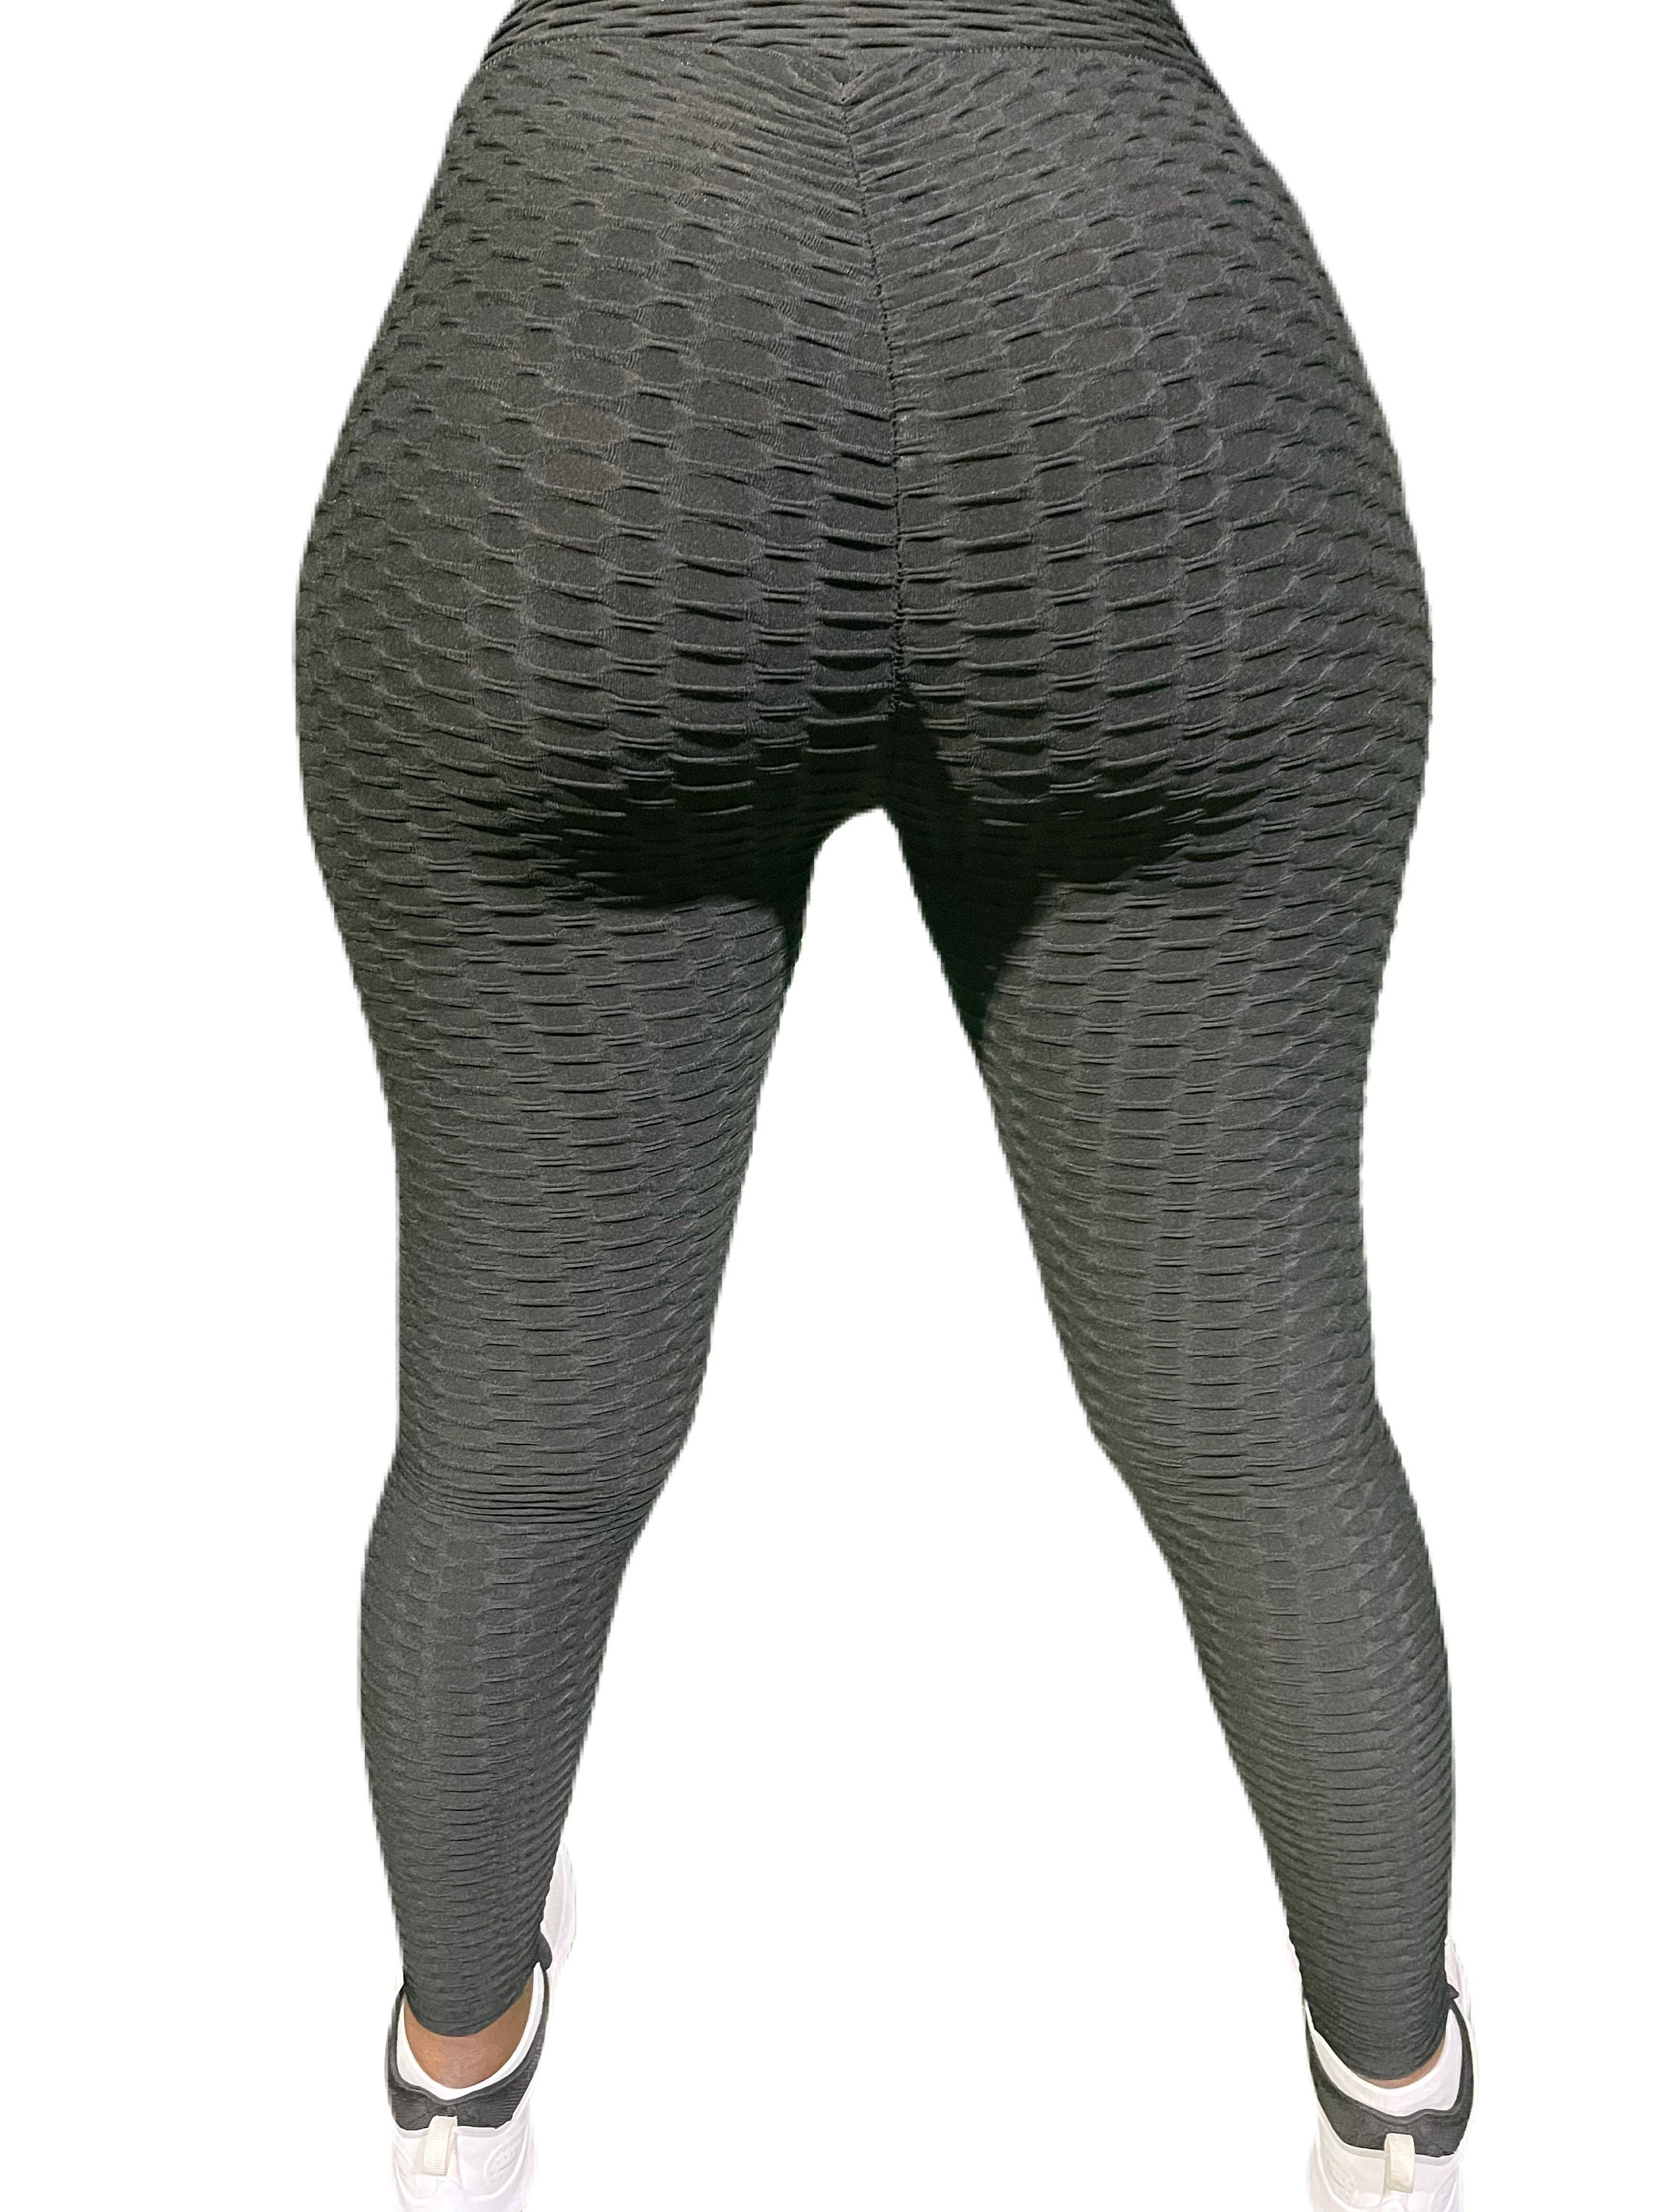 Honey-Comb TikTok Brazilian Butt Lifting Full-Length Leggings Featuring 2  Side Pockets. (6 Pack) - 92%Polyester, 8%Spandex - 6 Sets Per Pack - Full  Length Leggings Featuring Elastic Waistband and 2 Side Pockets 